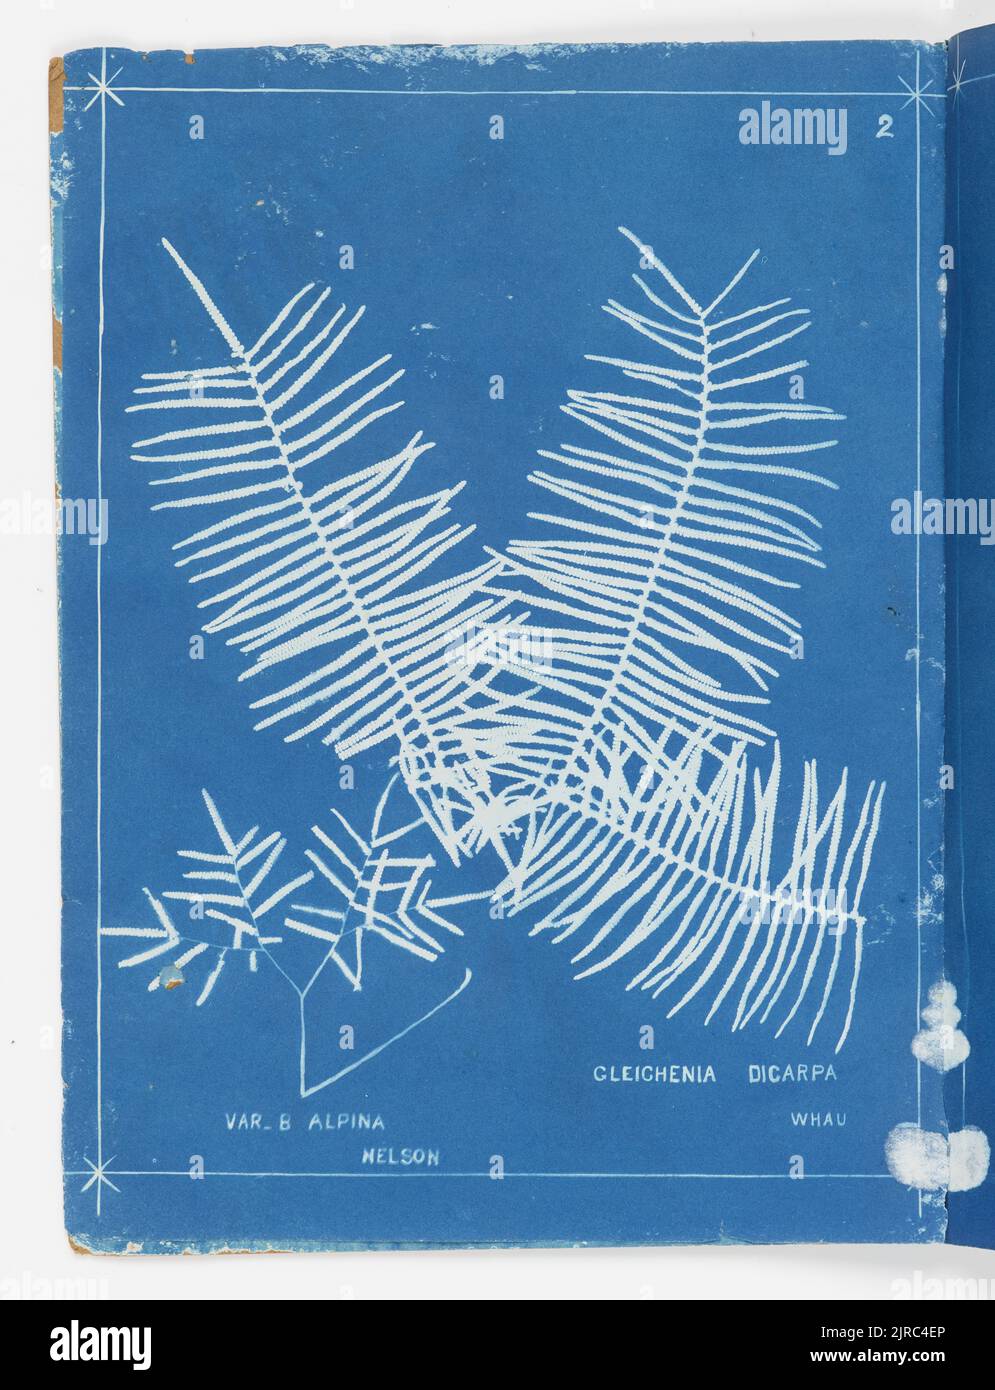 Gleichenia dicarpa, Whau, and var. B alpina, Nelson. From the album: New Zealand ferns,148 varieties, 1880, Auckland, by Herbert Dobbie. Stock Photo